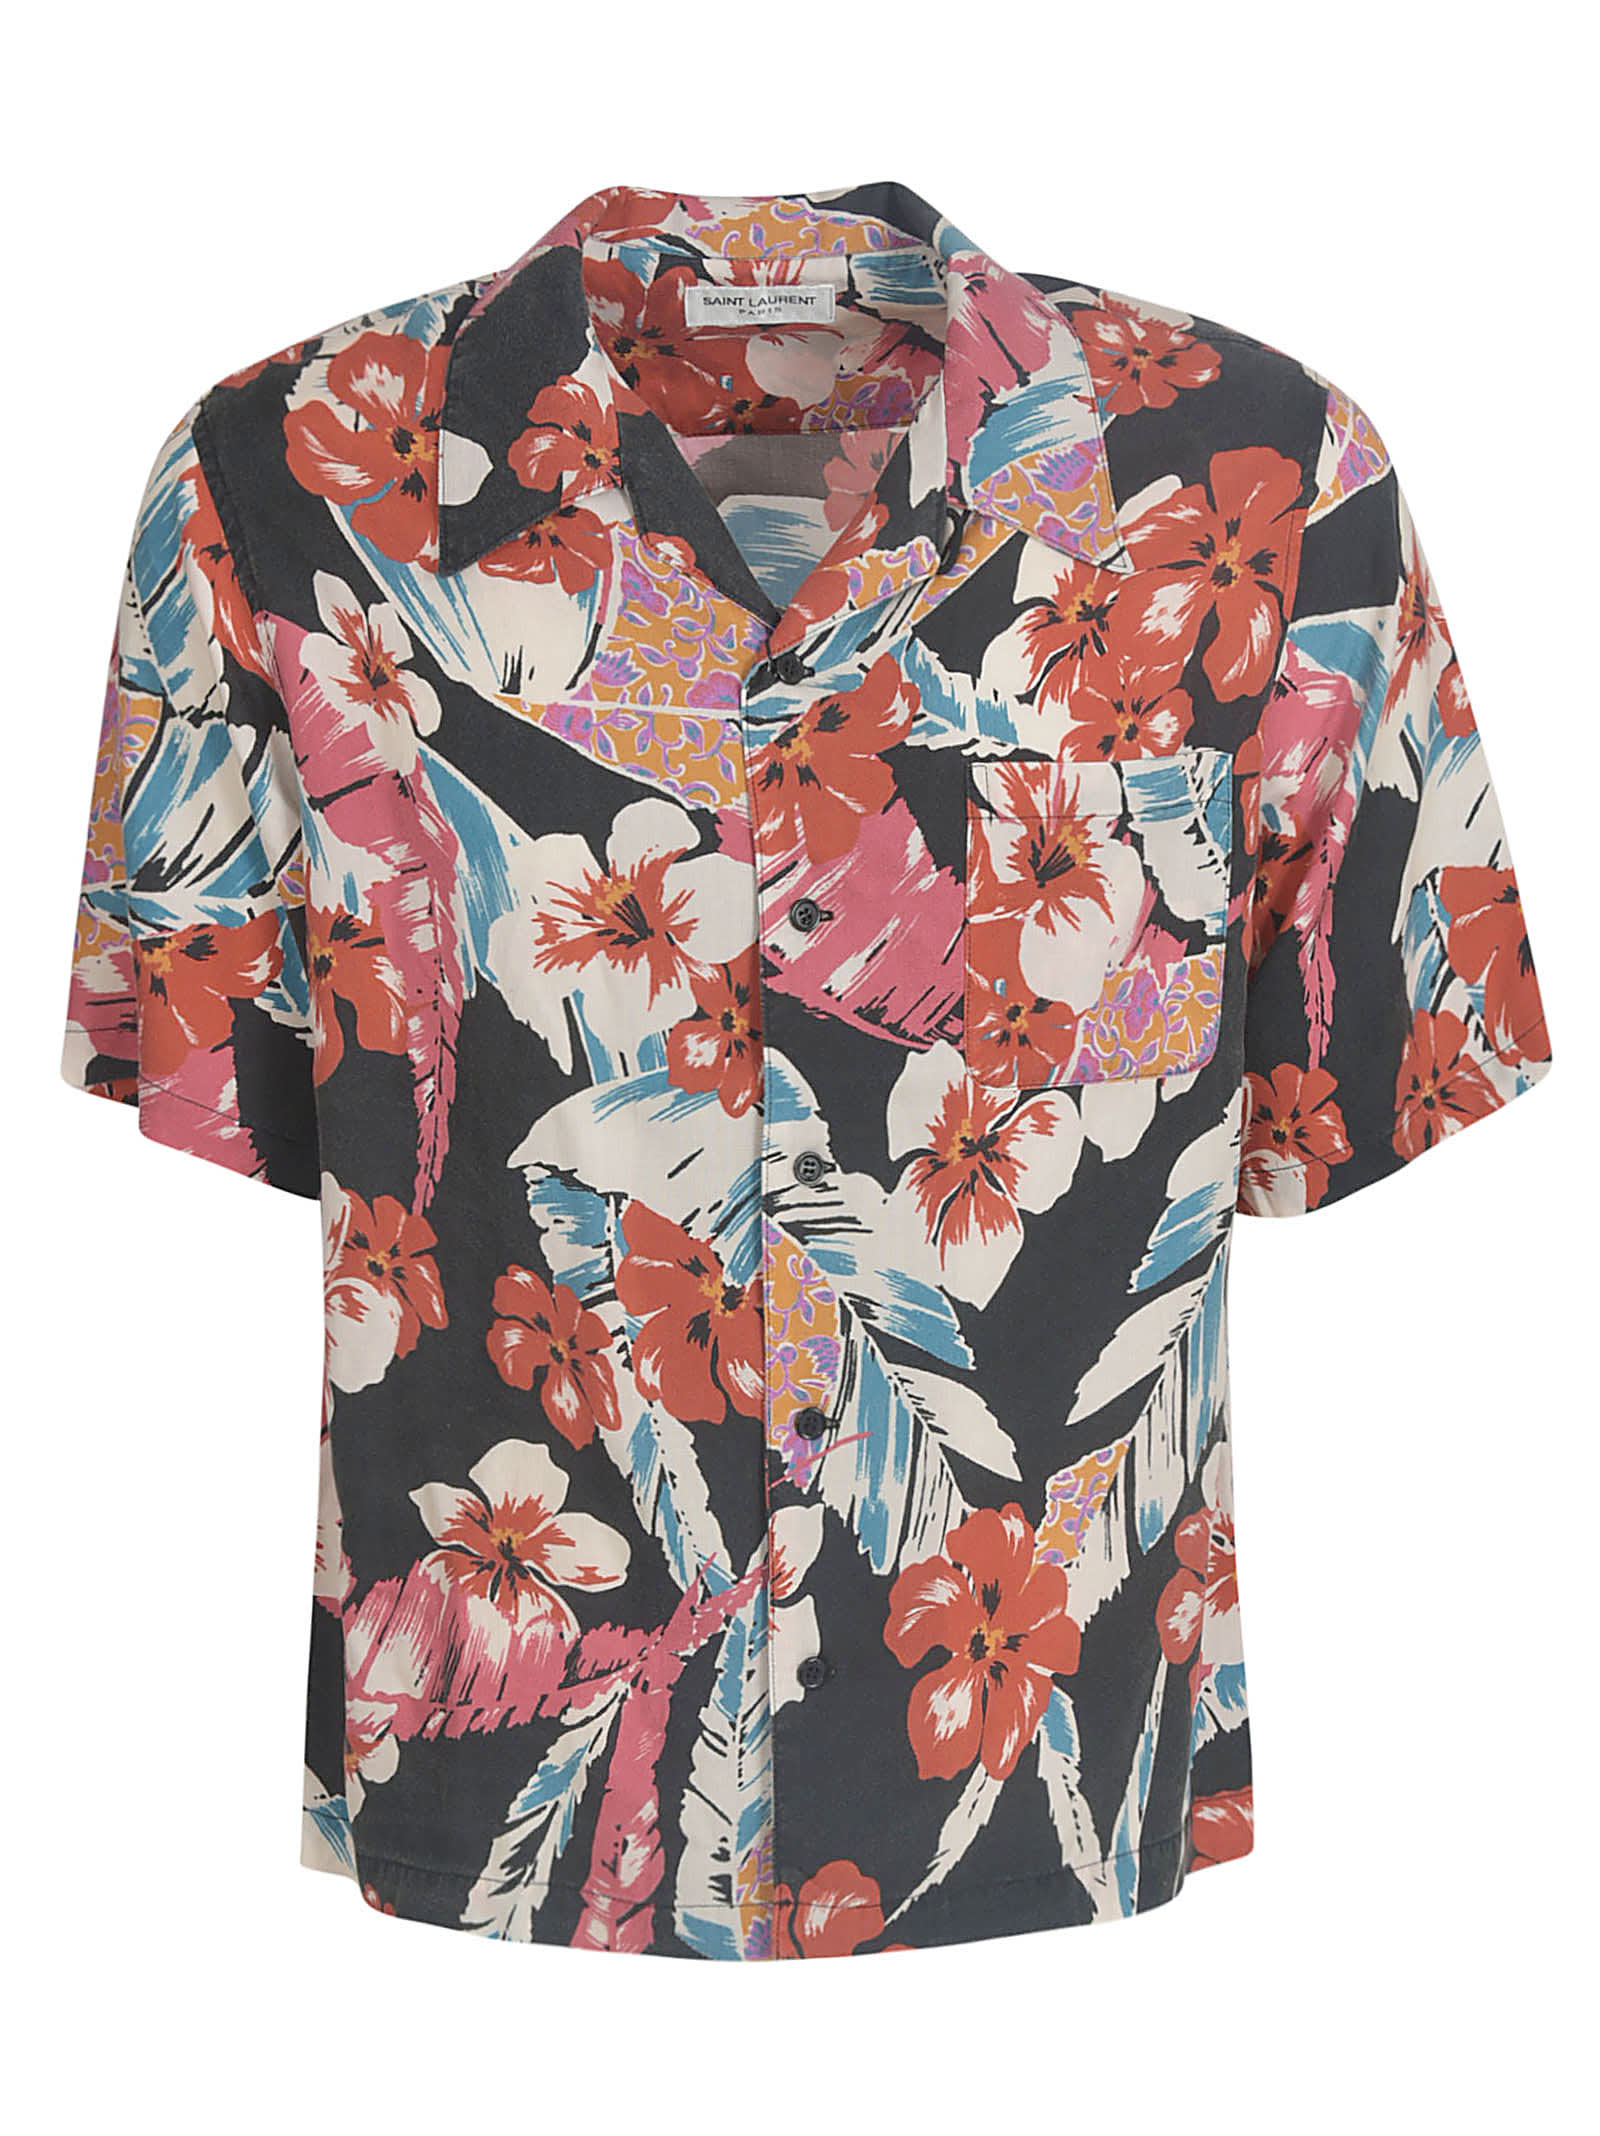 Saint Laurent Floral Printed Shirt